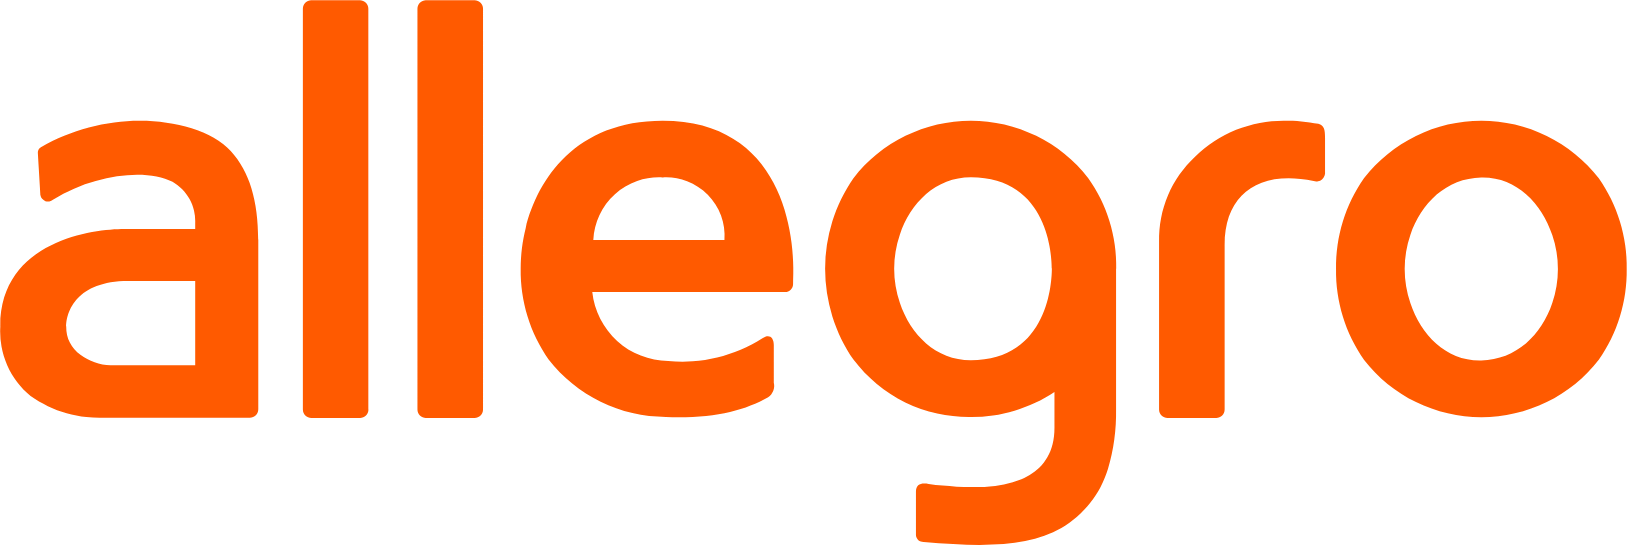 Allegro.eu logo large (transparent PNG)